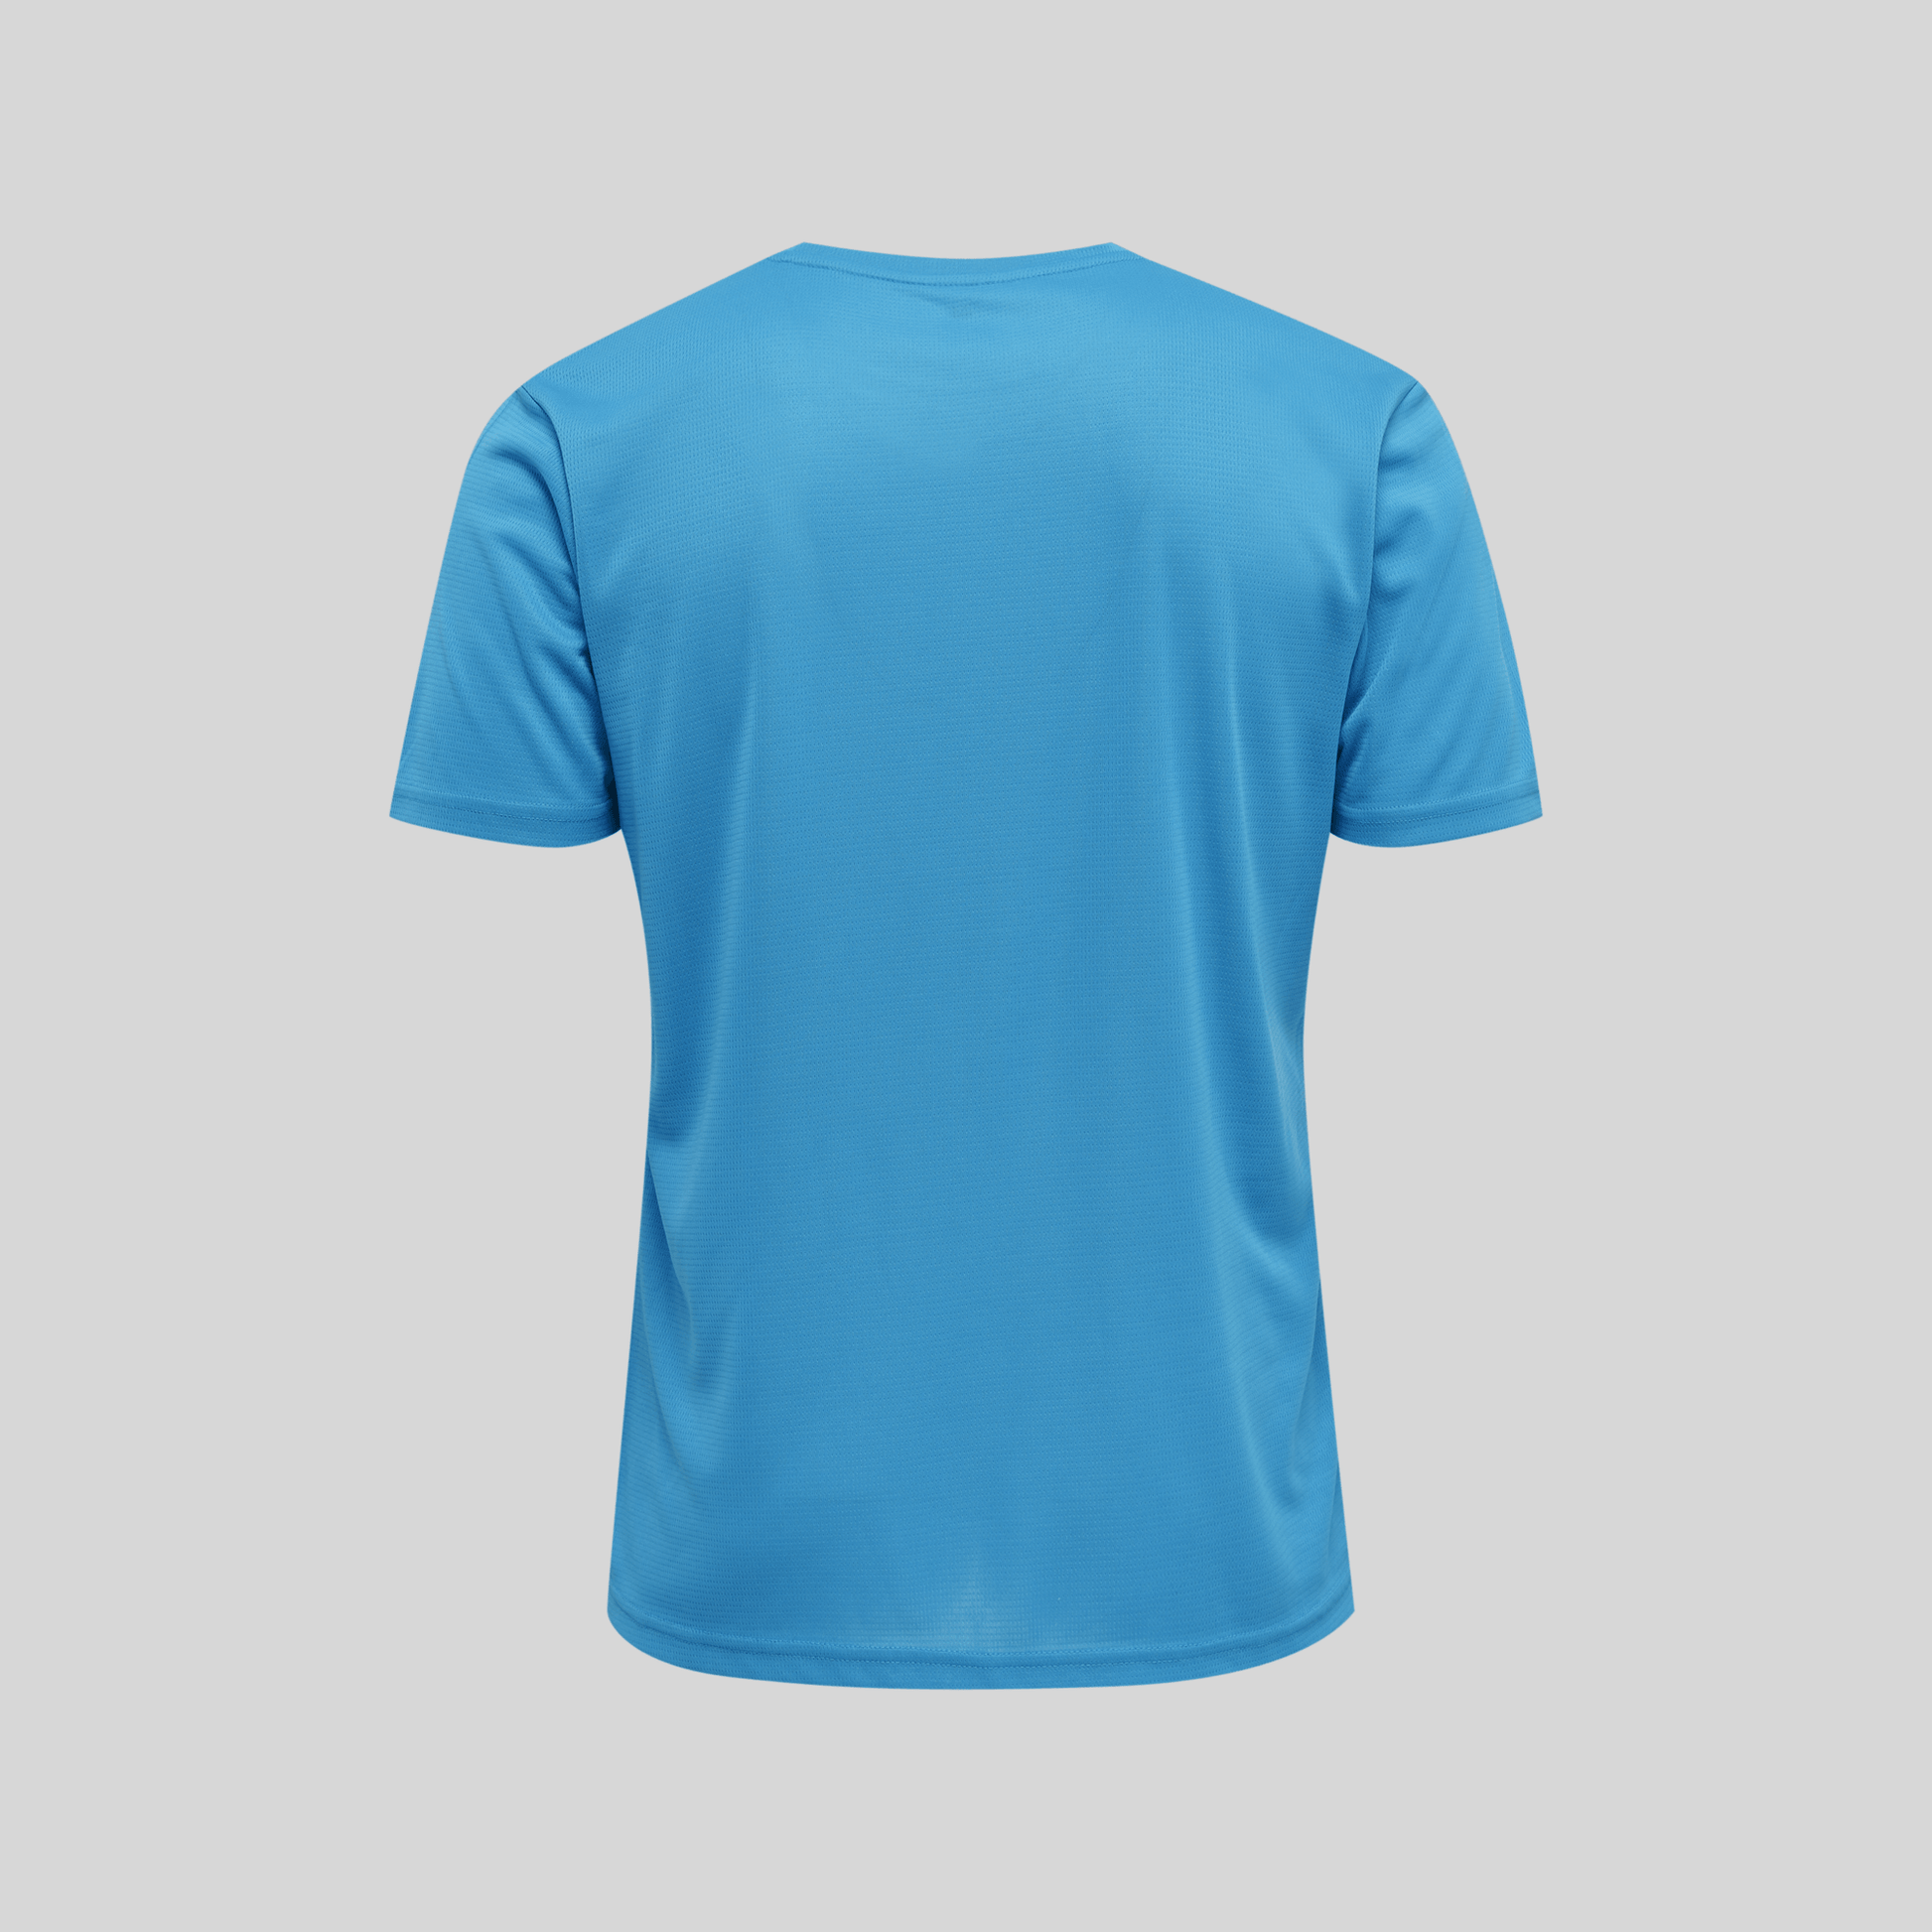 Vigor Tshirt Ocean Blue Men's - Sports Cartel